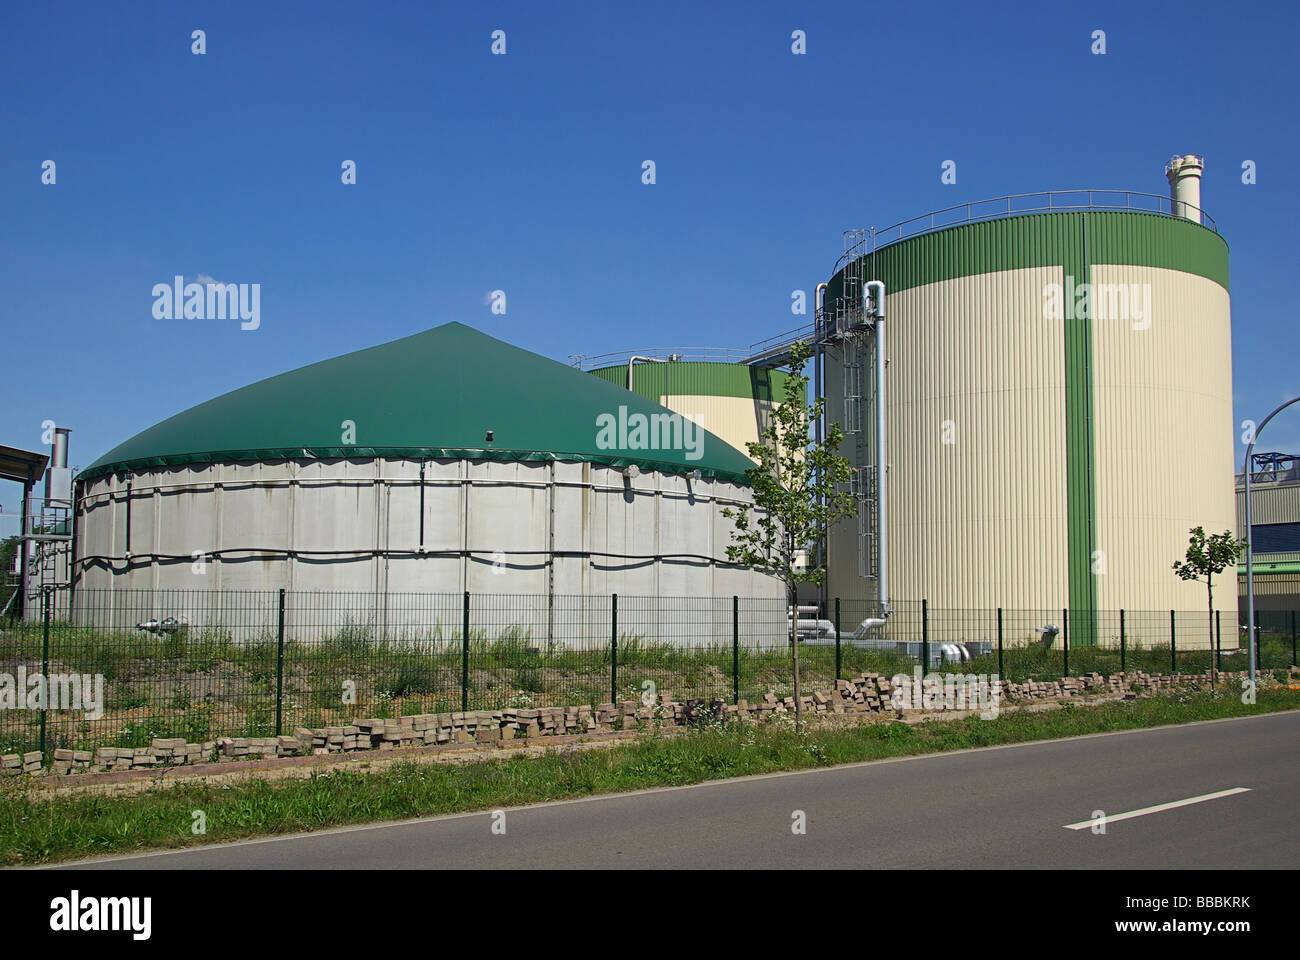 Biogasanlage biogas plant 15 Stock Photo